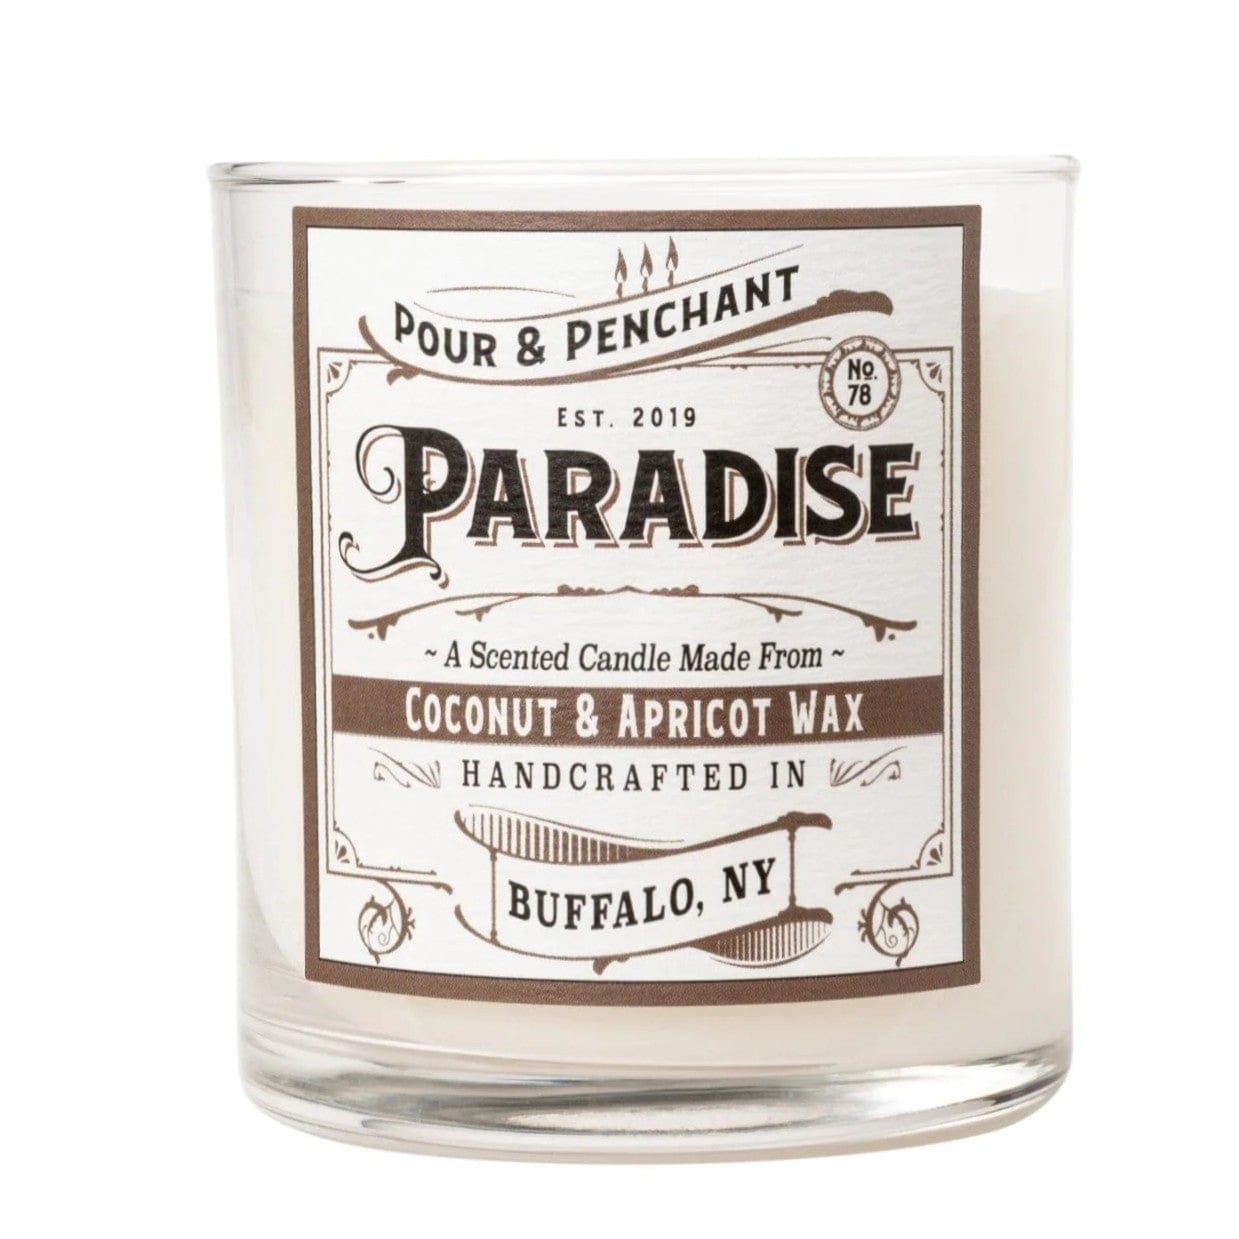 Pour & Penchant 10 oz Scented Candle - PARADISE no.78 - Coconut, Vanilla & Sugar Cane